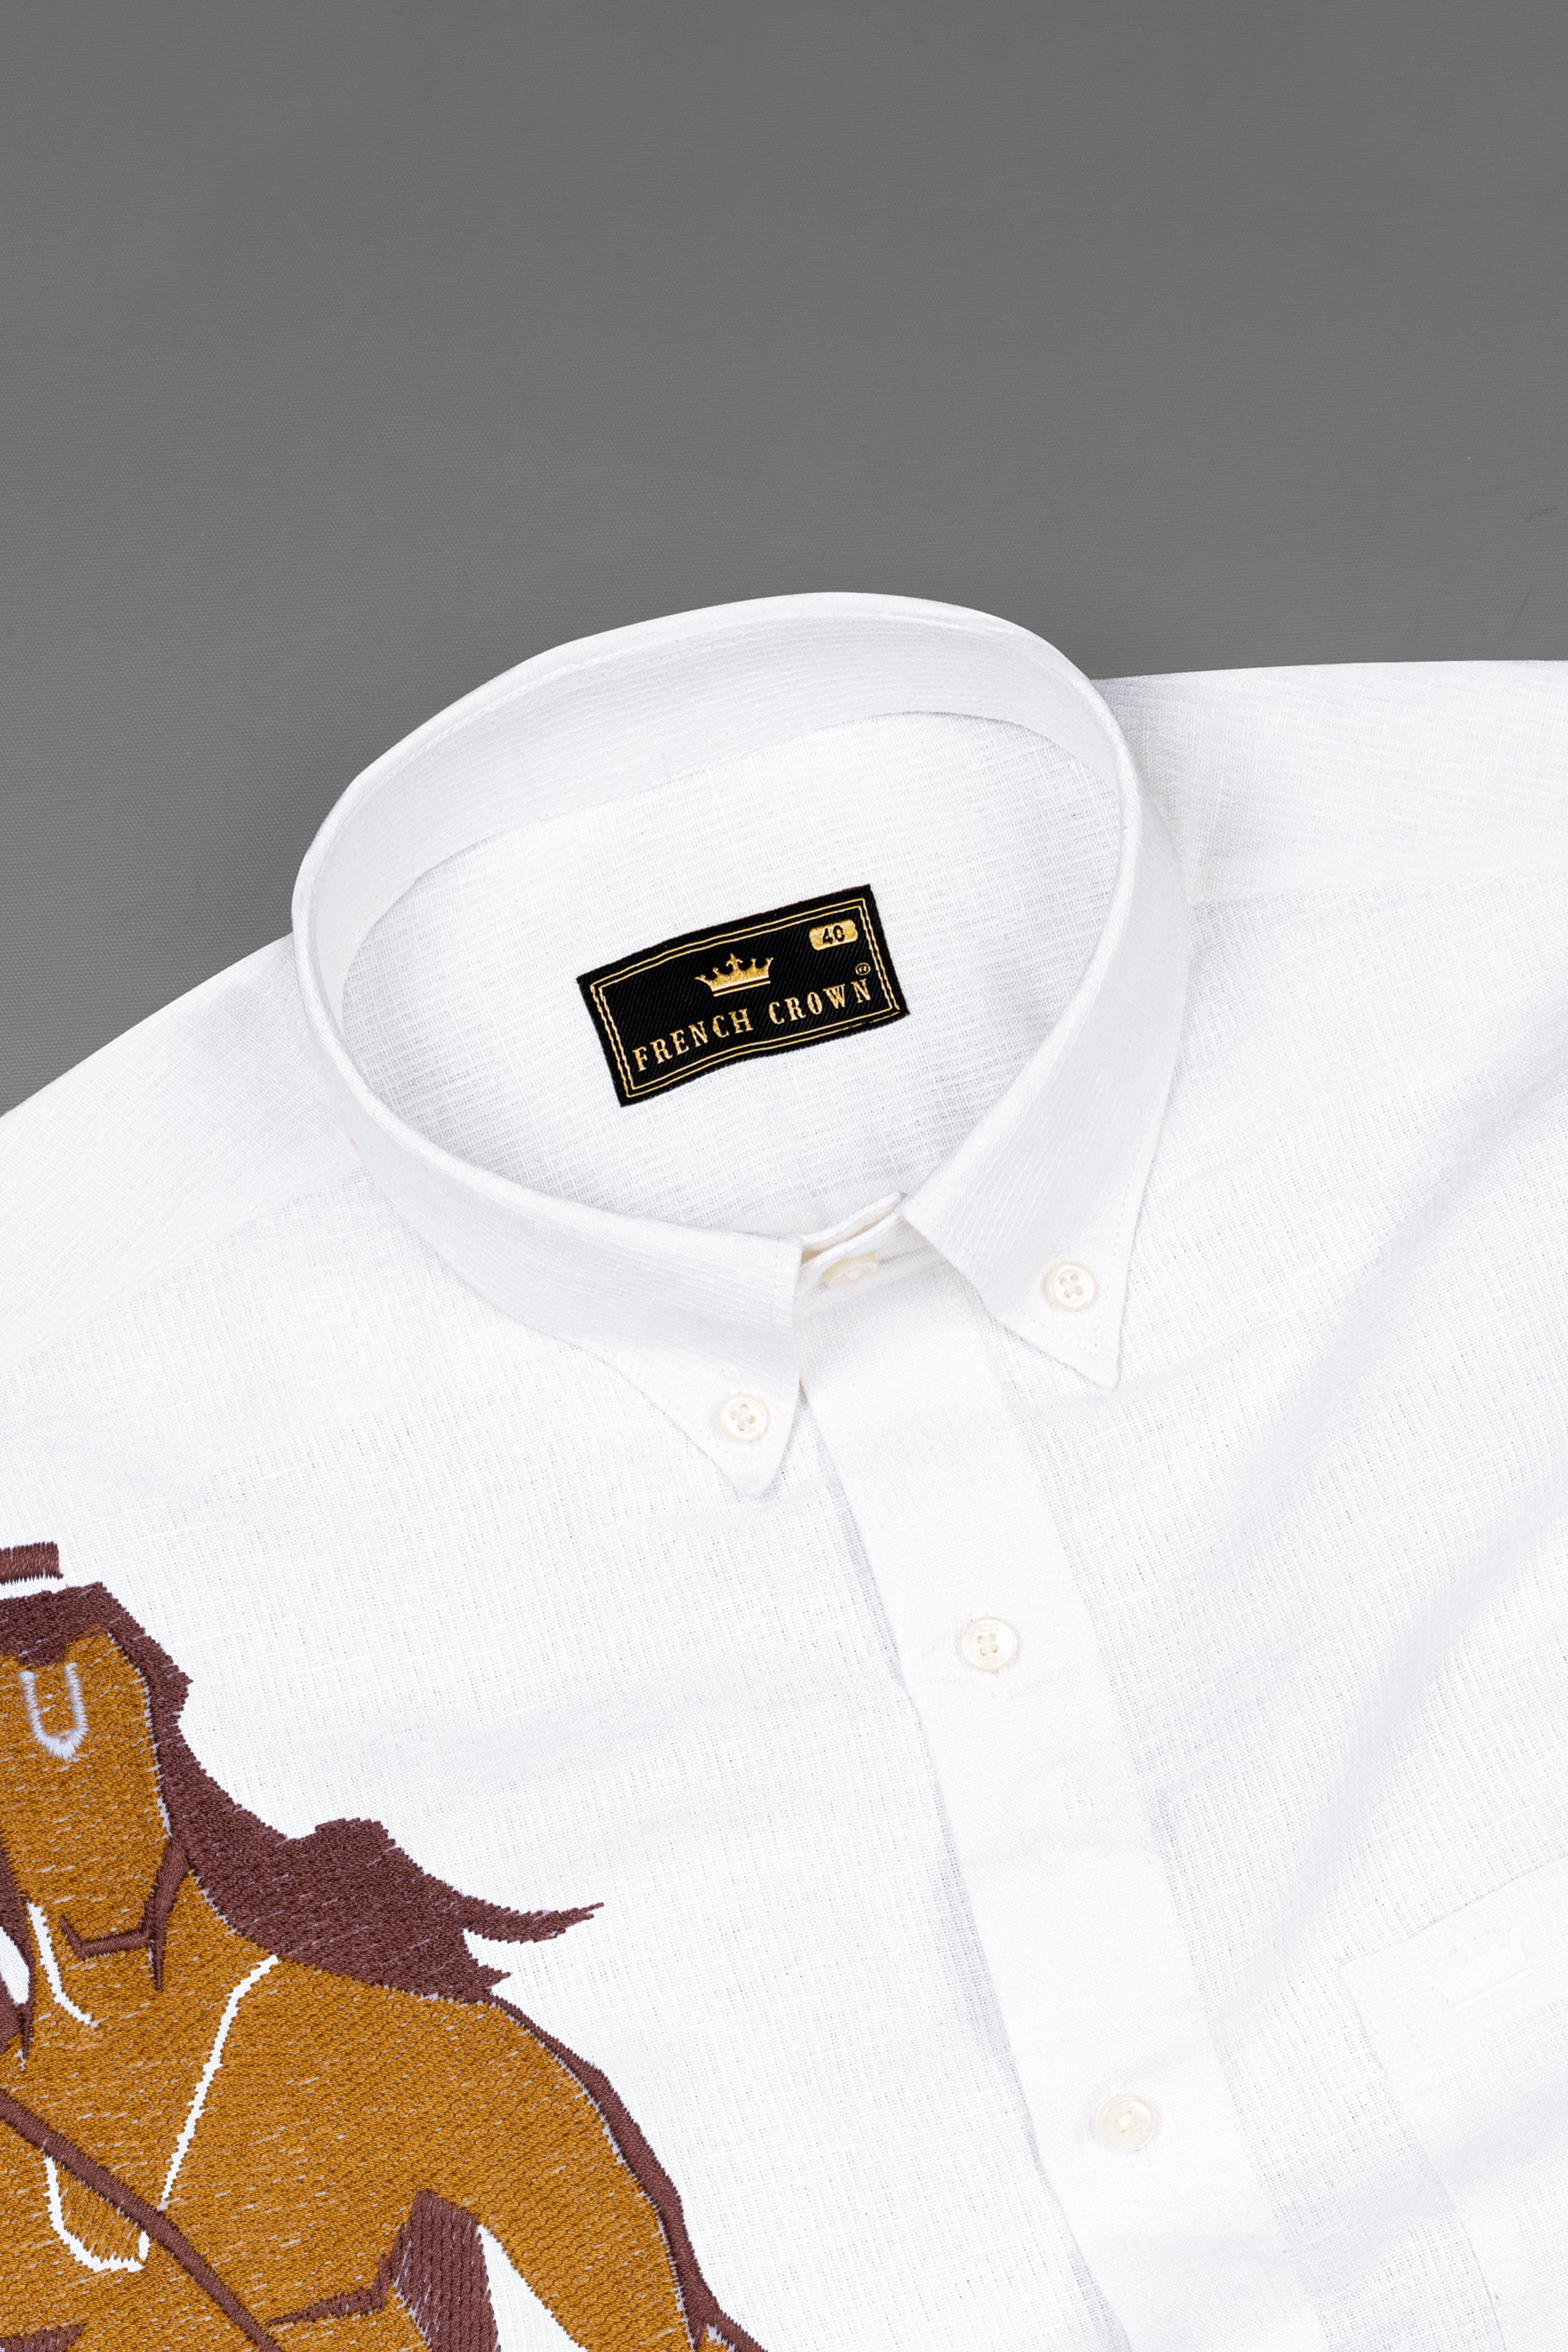 Bright White Lord Ram Embroidered Dobby Textured Premium Giza Cotton Designer Shirt